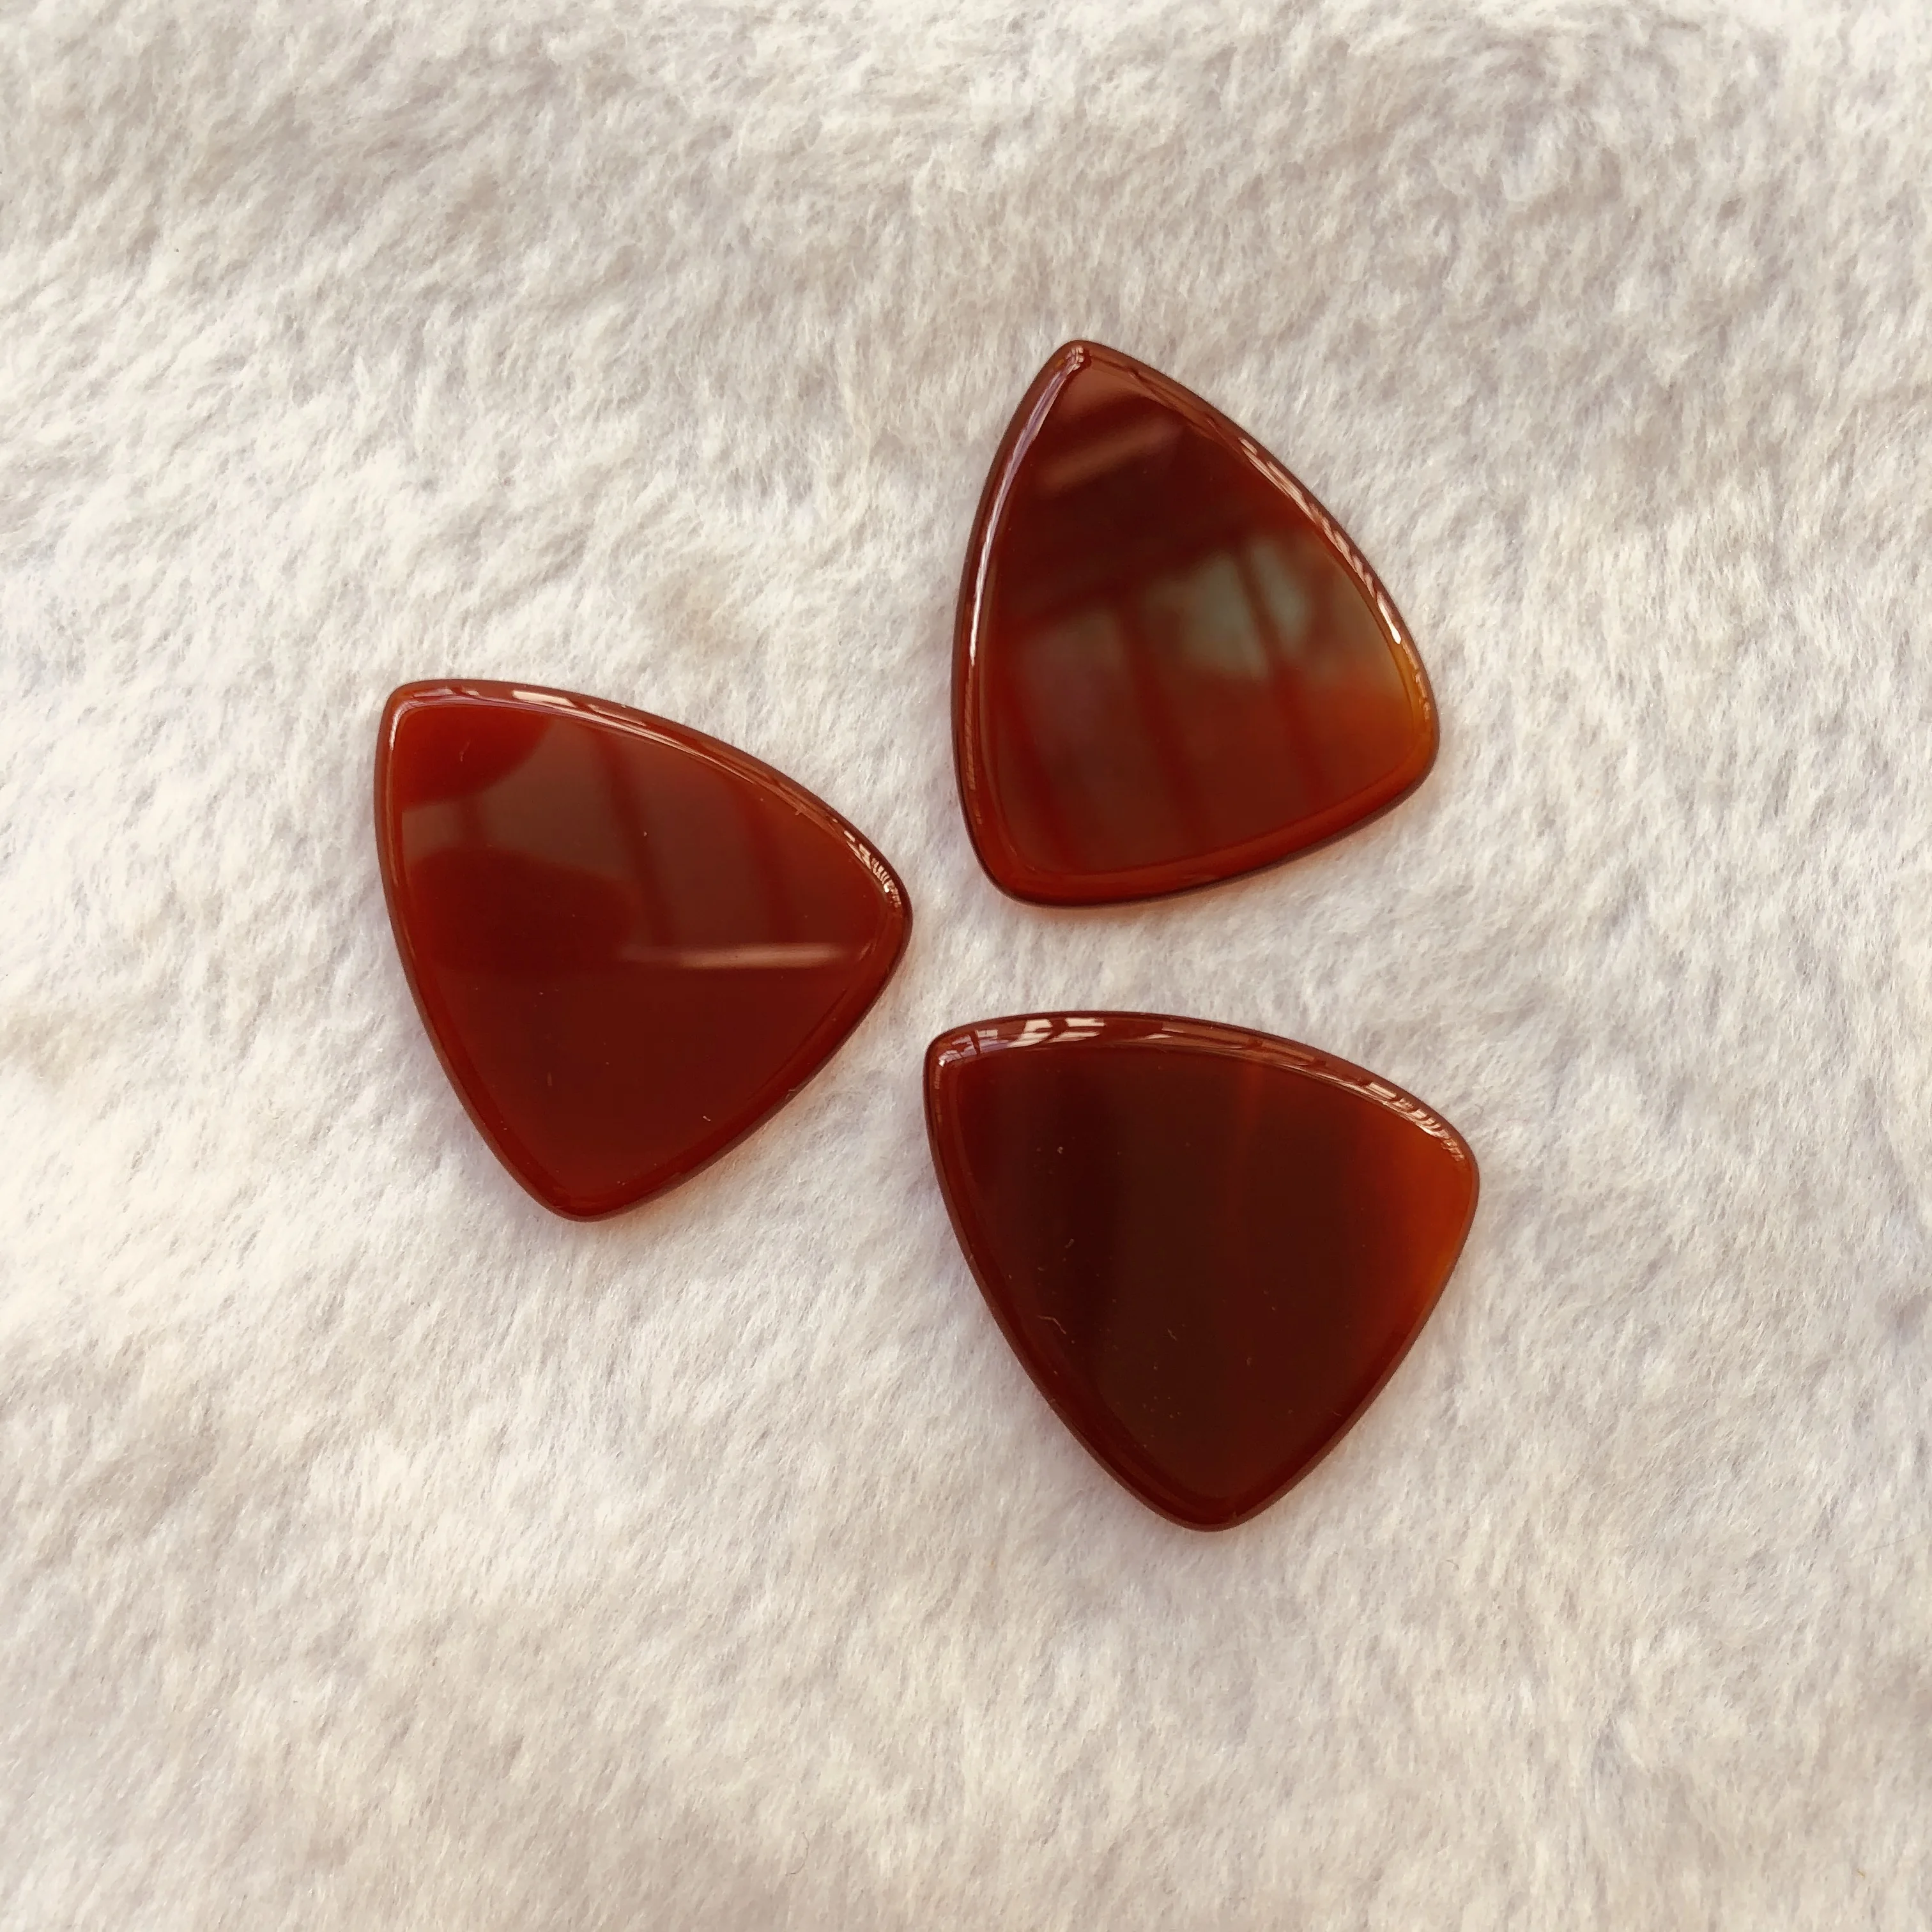 Wholesale 4pcs Mixed Agate Stone Guitar Pick,"Round Tip" Natural Stone Guitar Picks Bead Pendant Guitar Pick,25x28x2.8mm